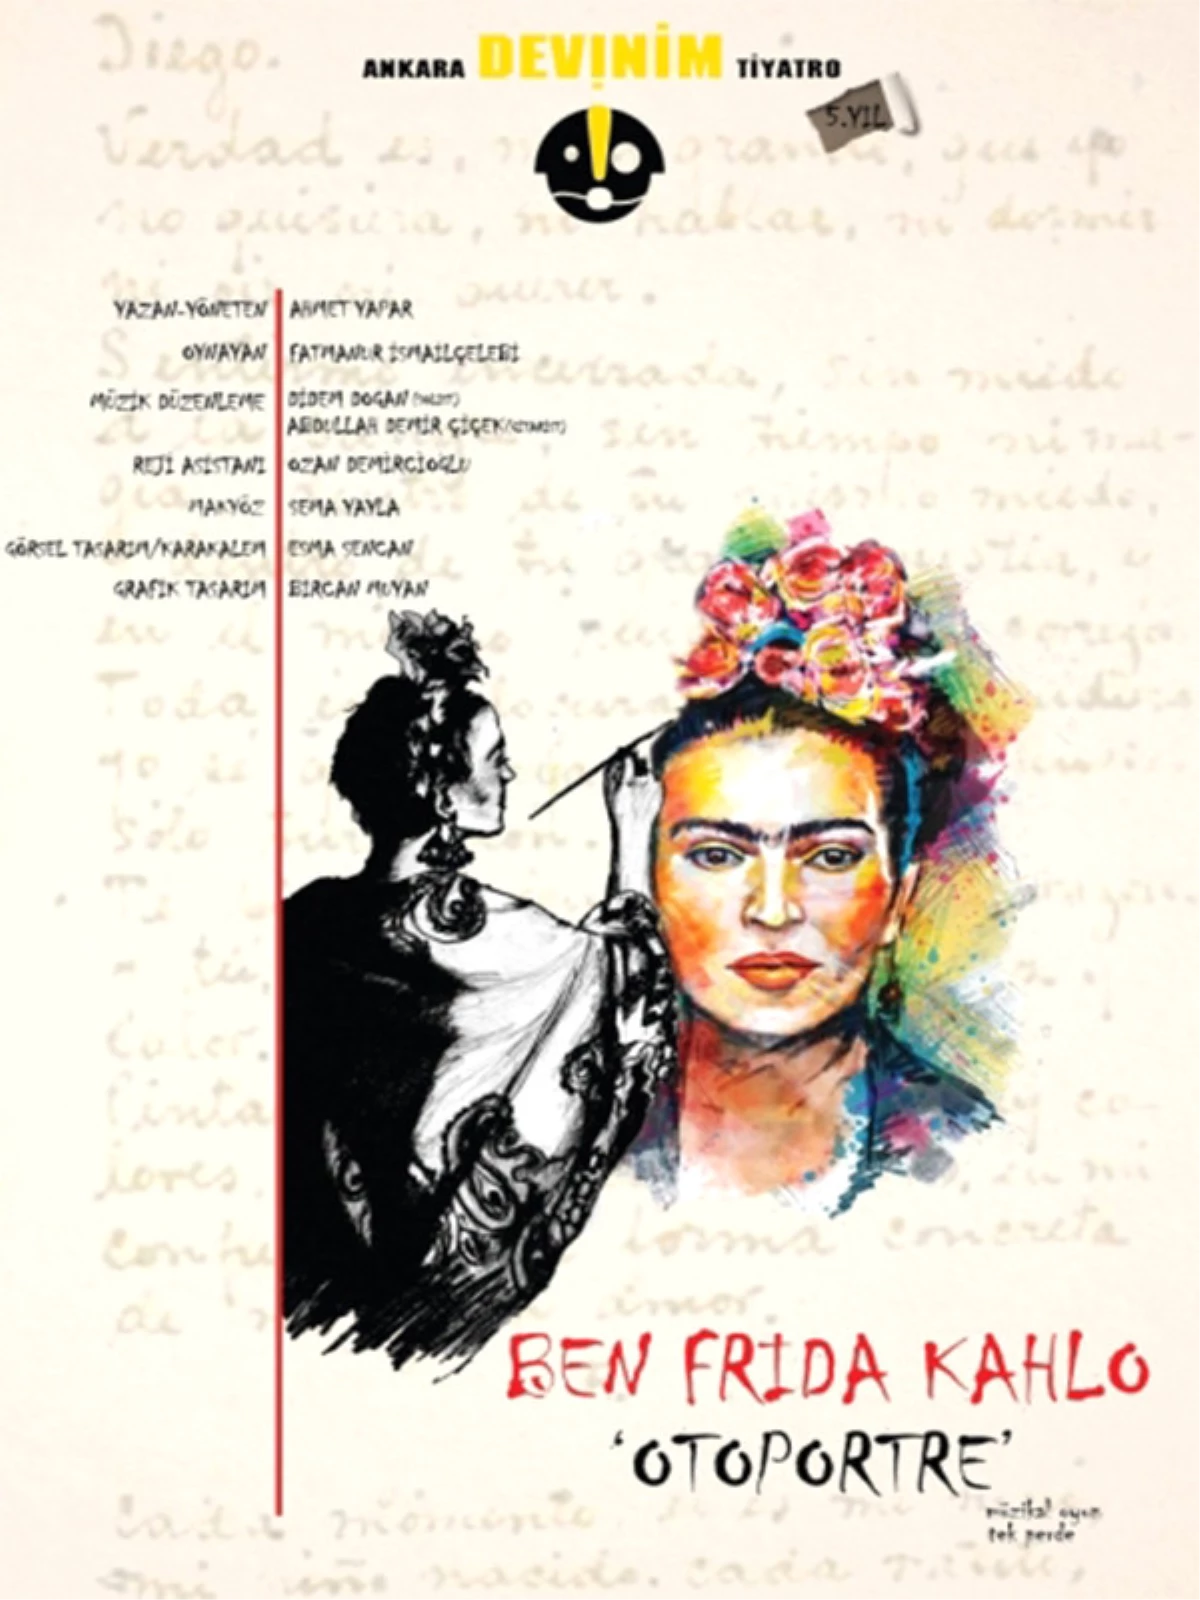 Ben Frida Kahlo "Otoportre"